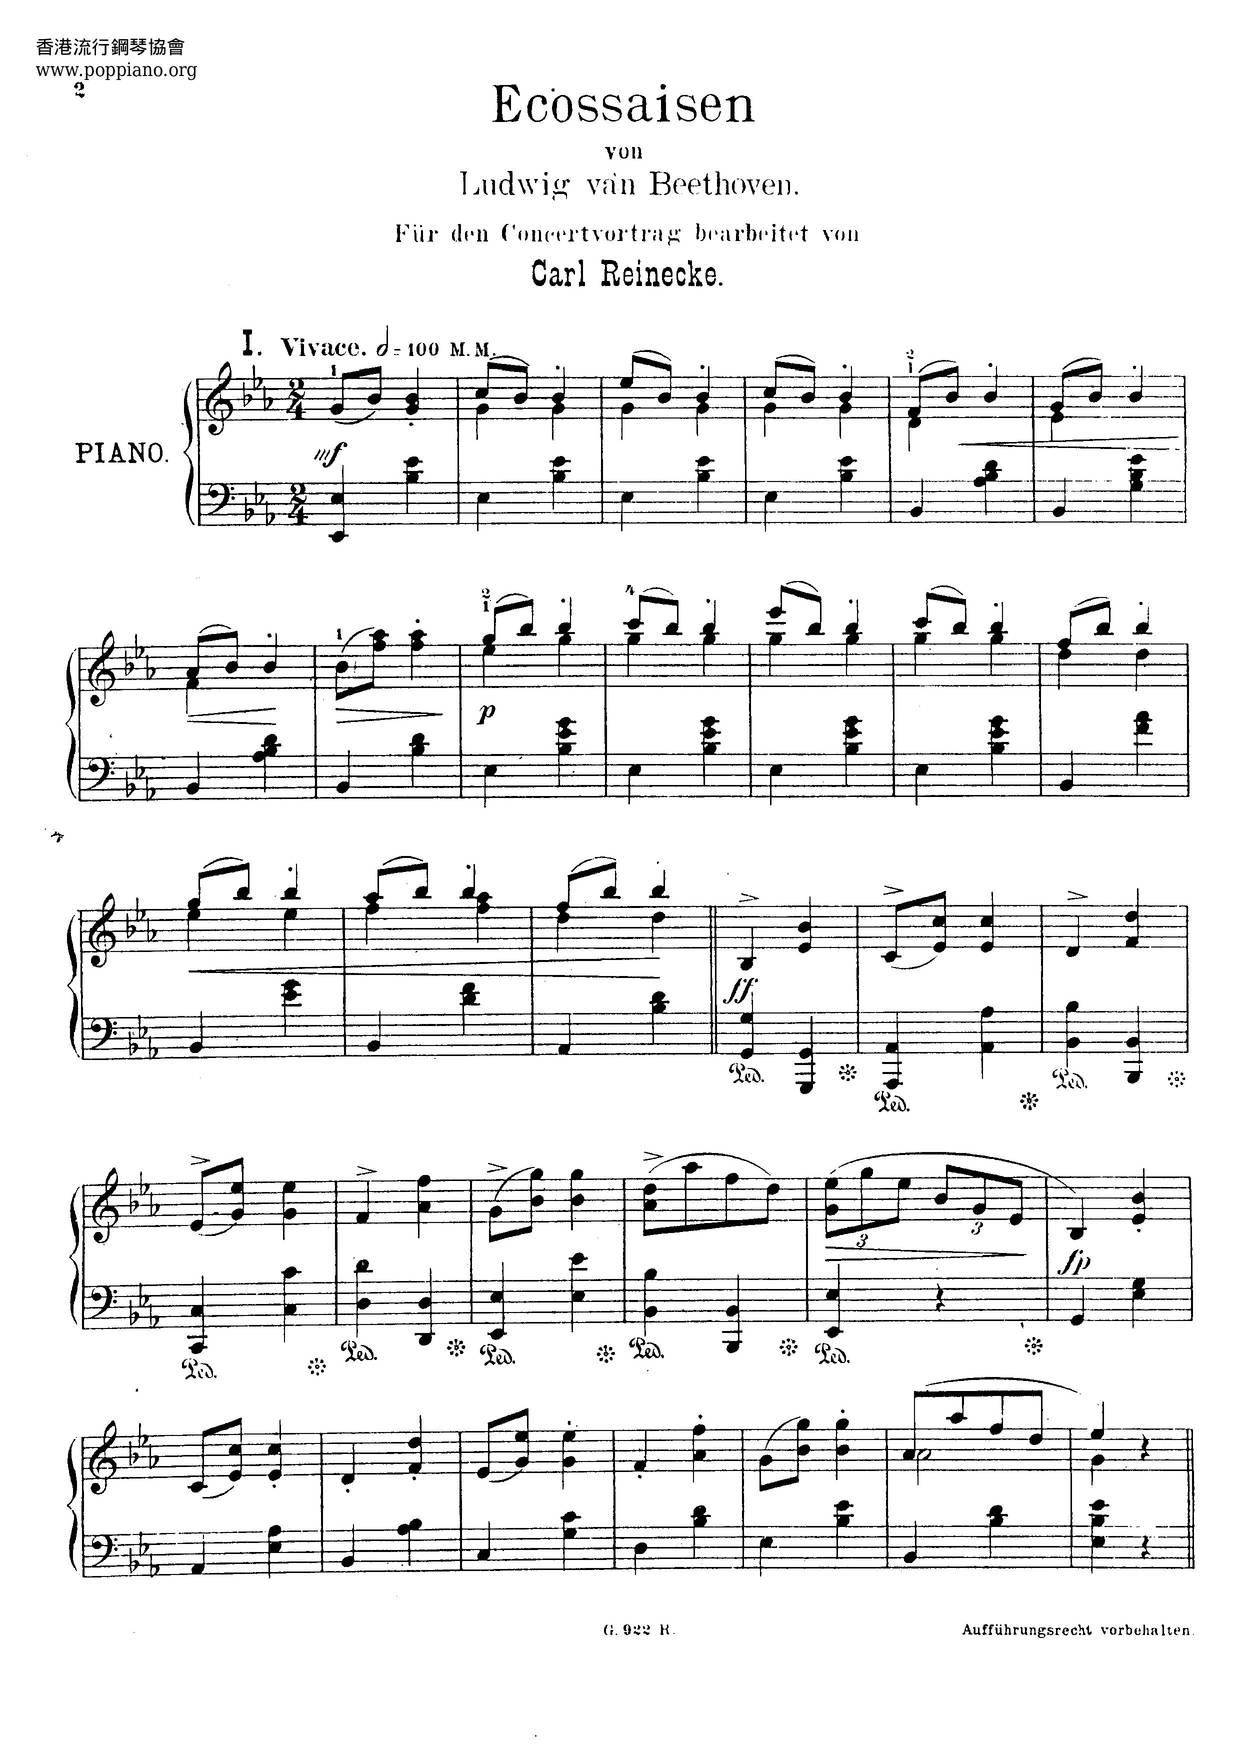 6 Ecossaises For Piano, WoO 83 Score